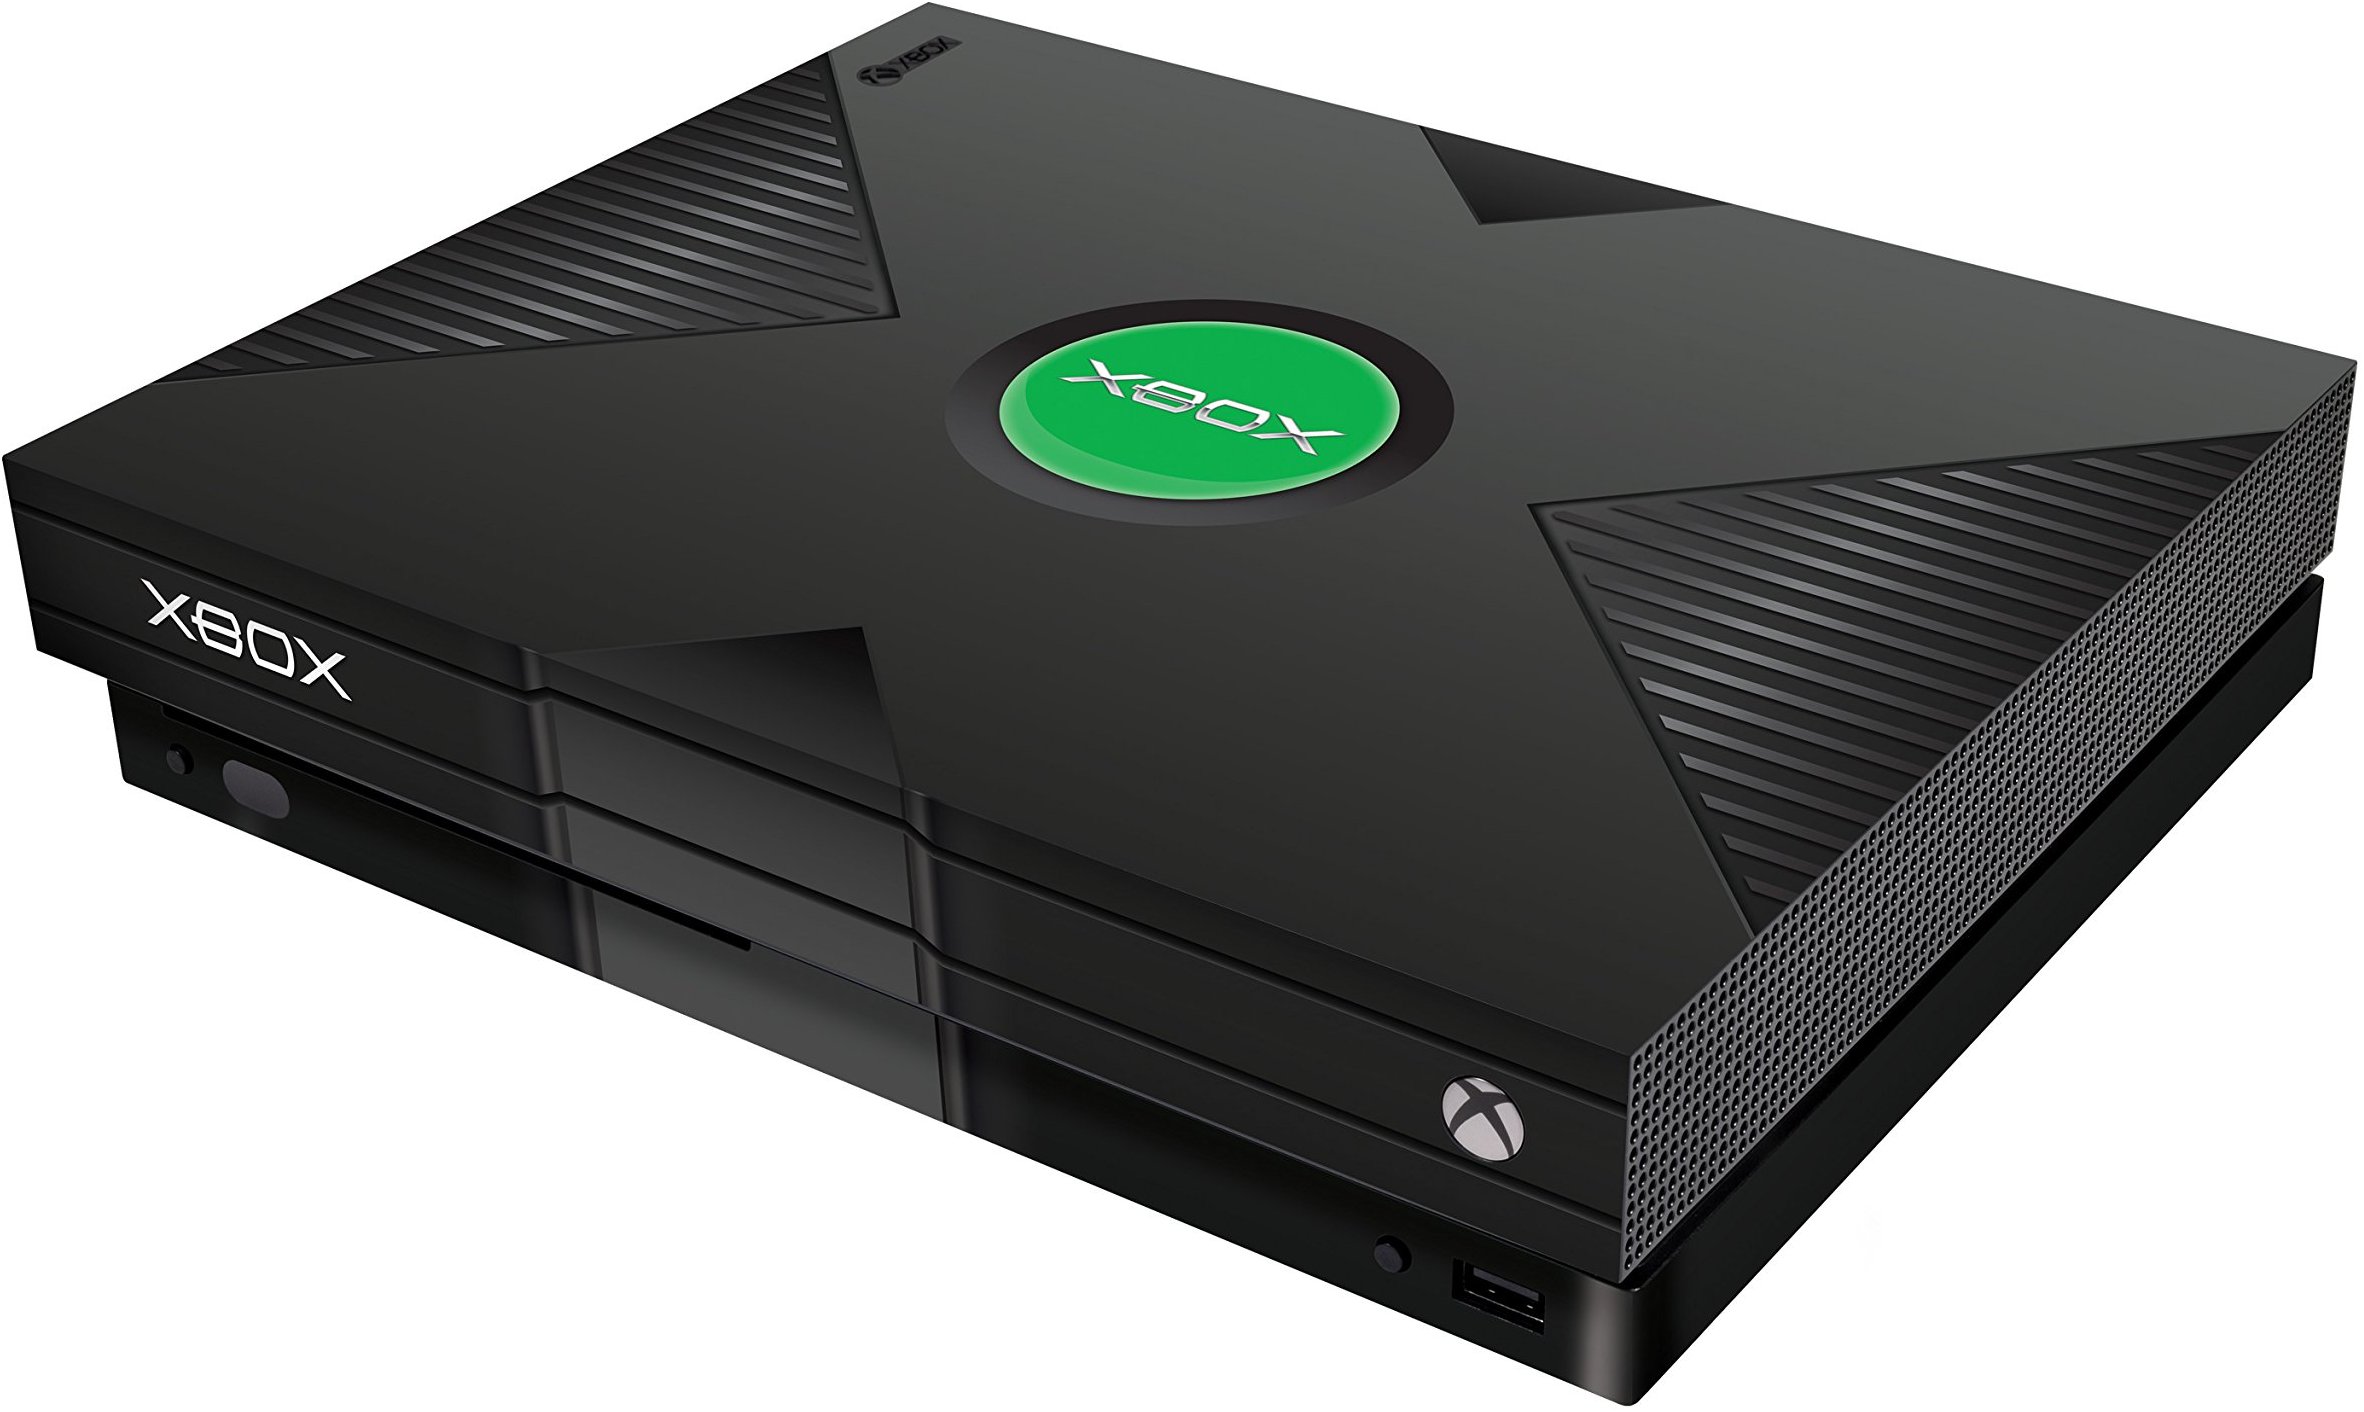 Revelan detalles del skin de Xbox original para el Xbox One X